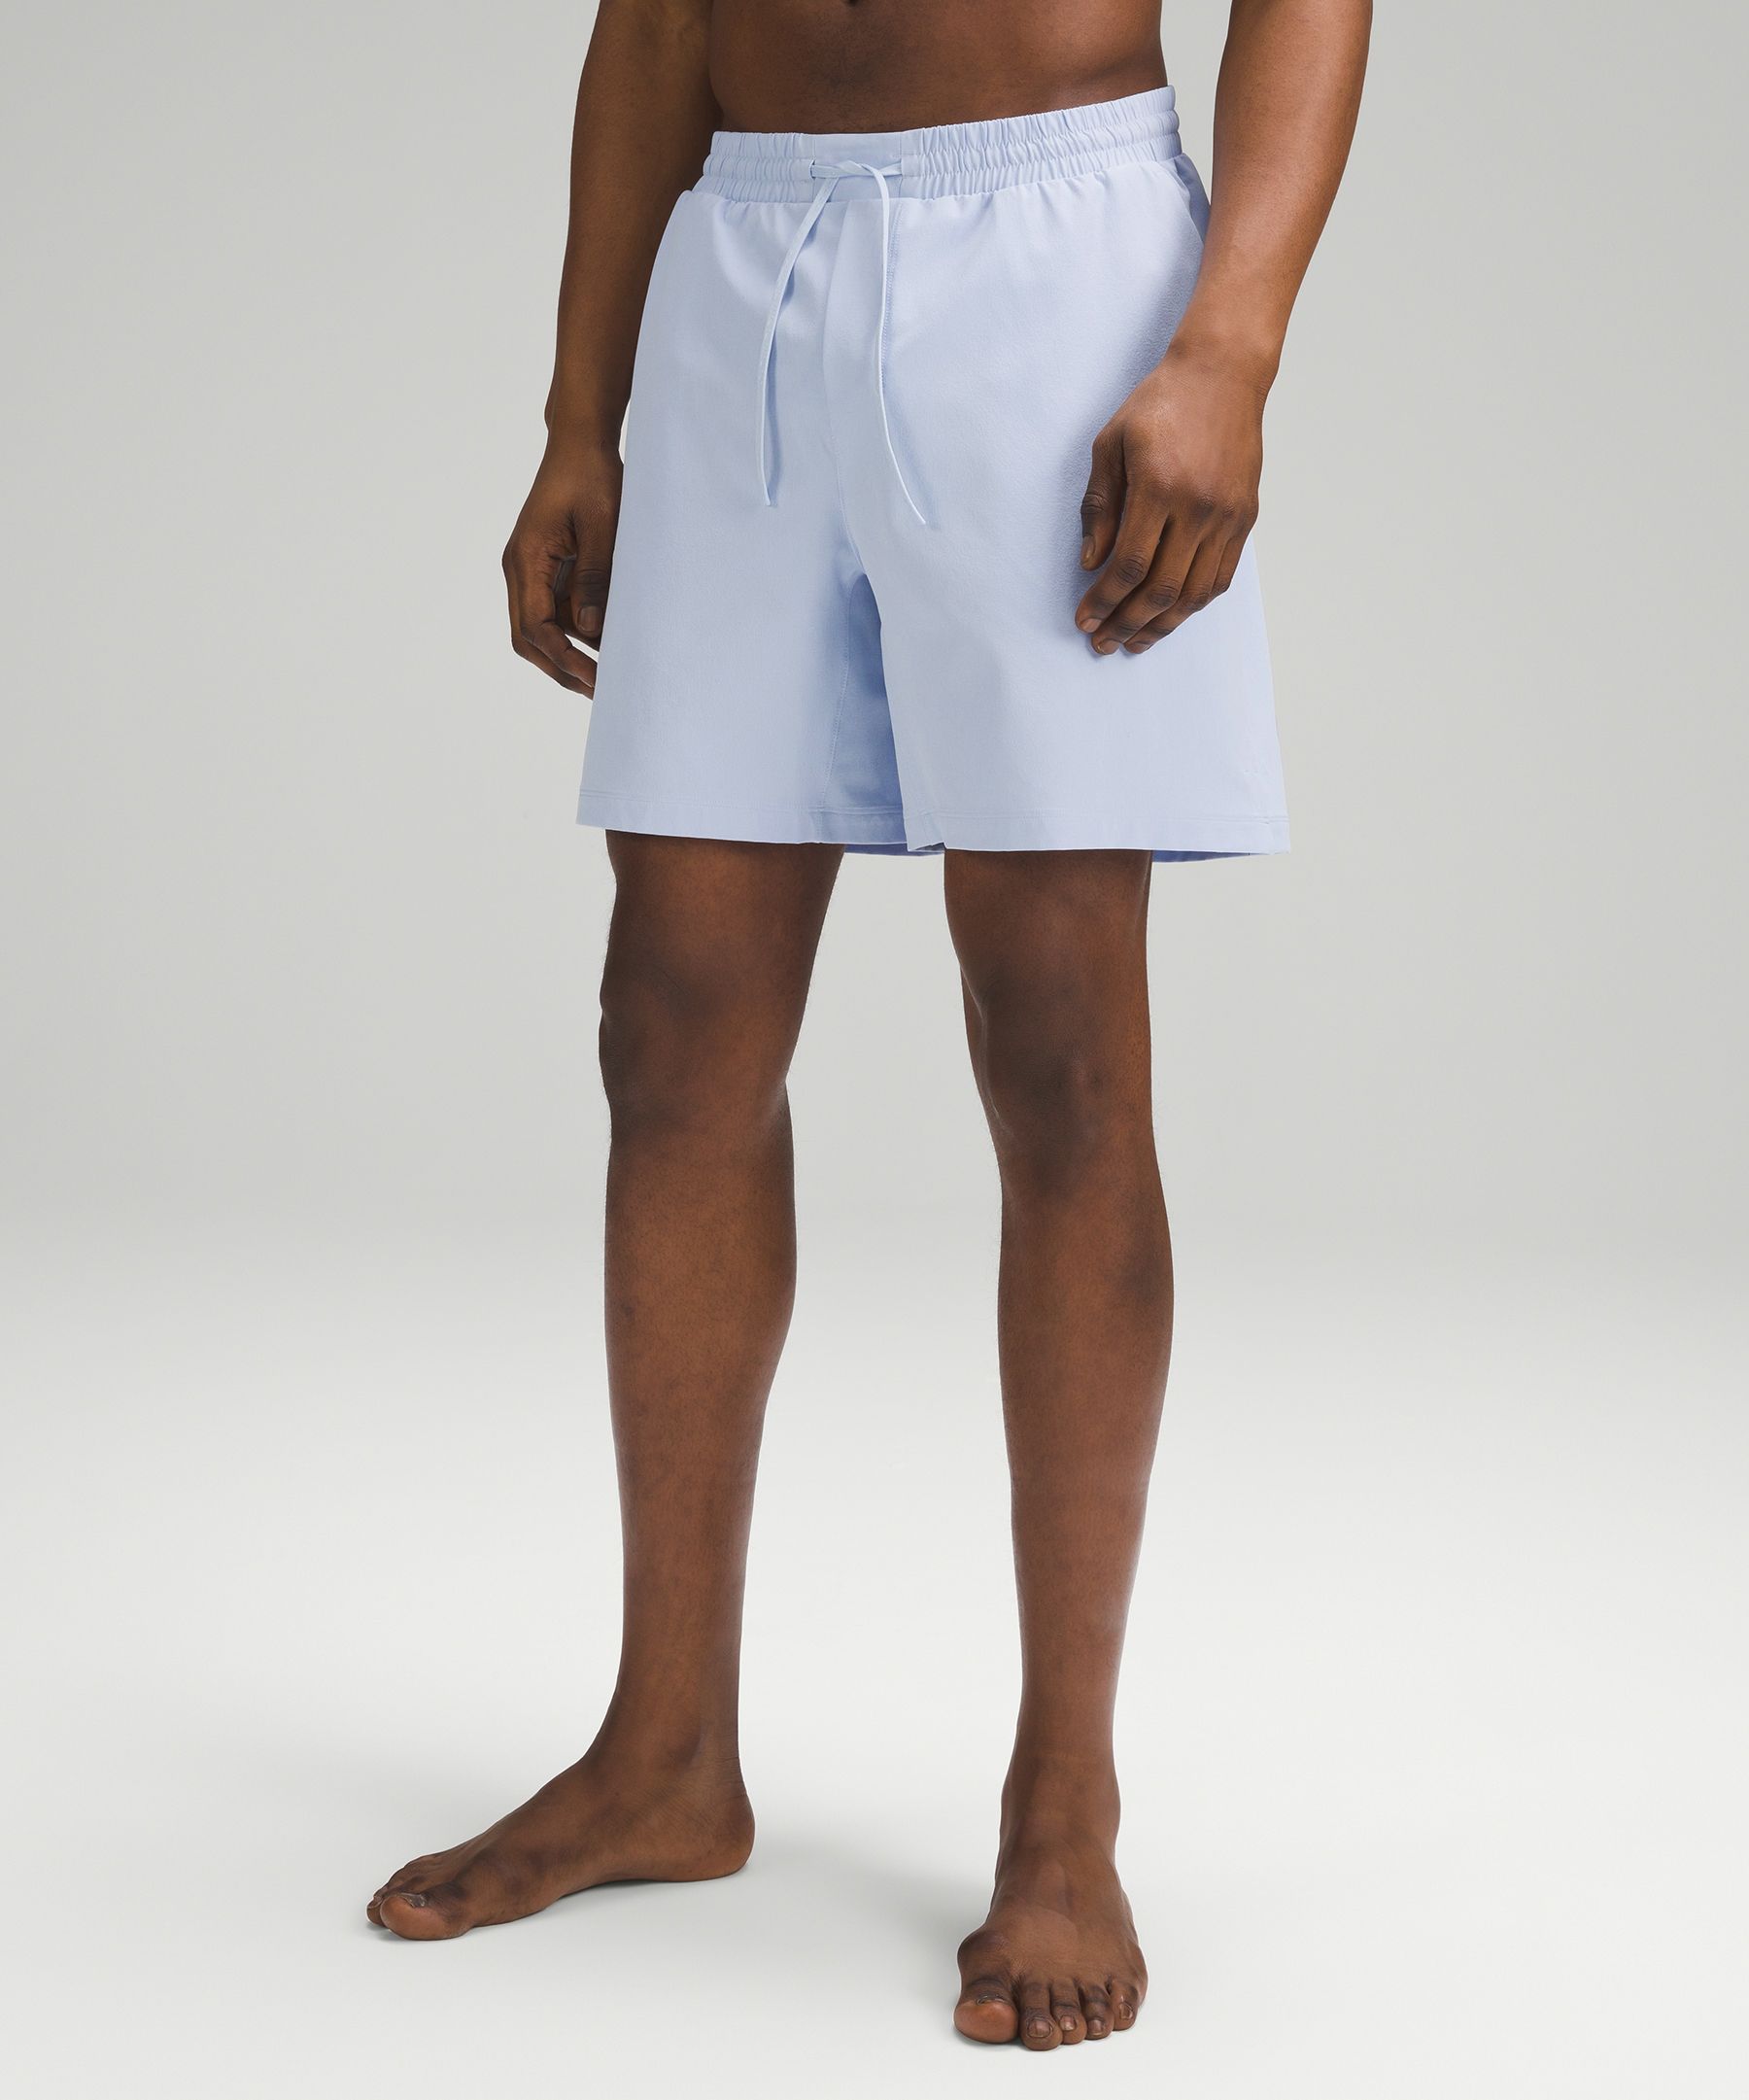 Men's Neon Shorts | lululemon